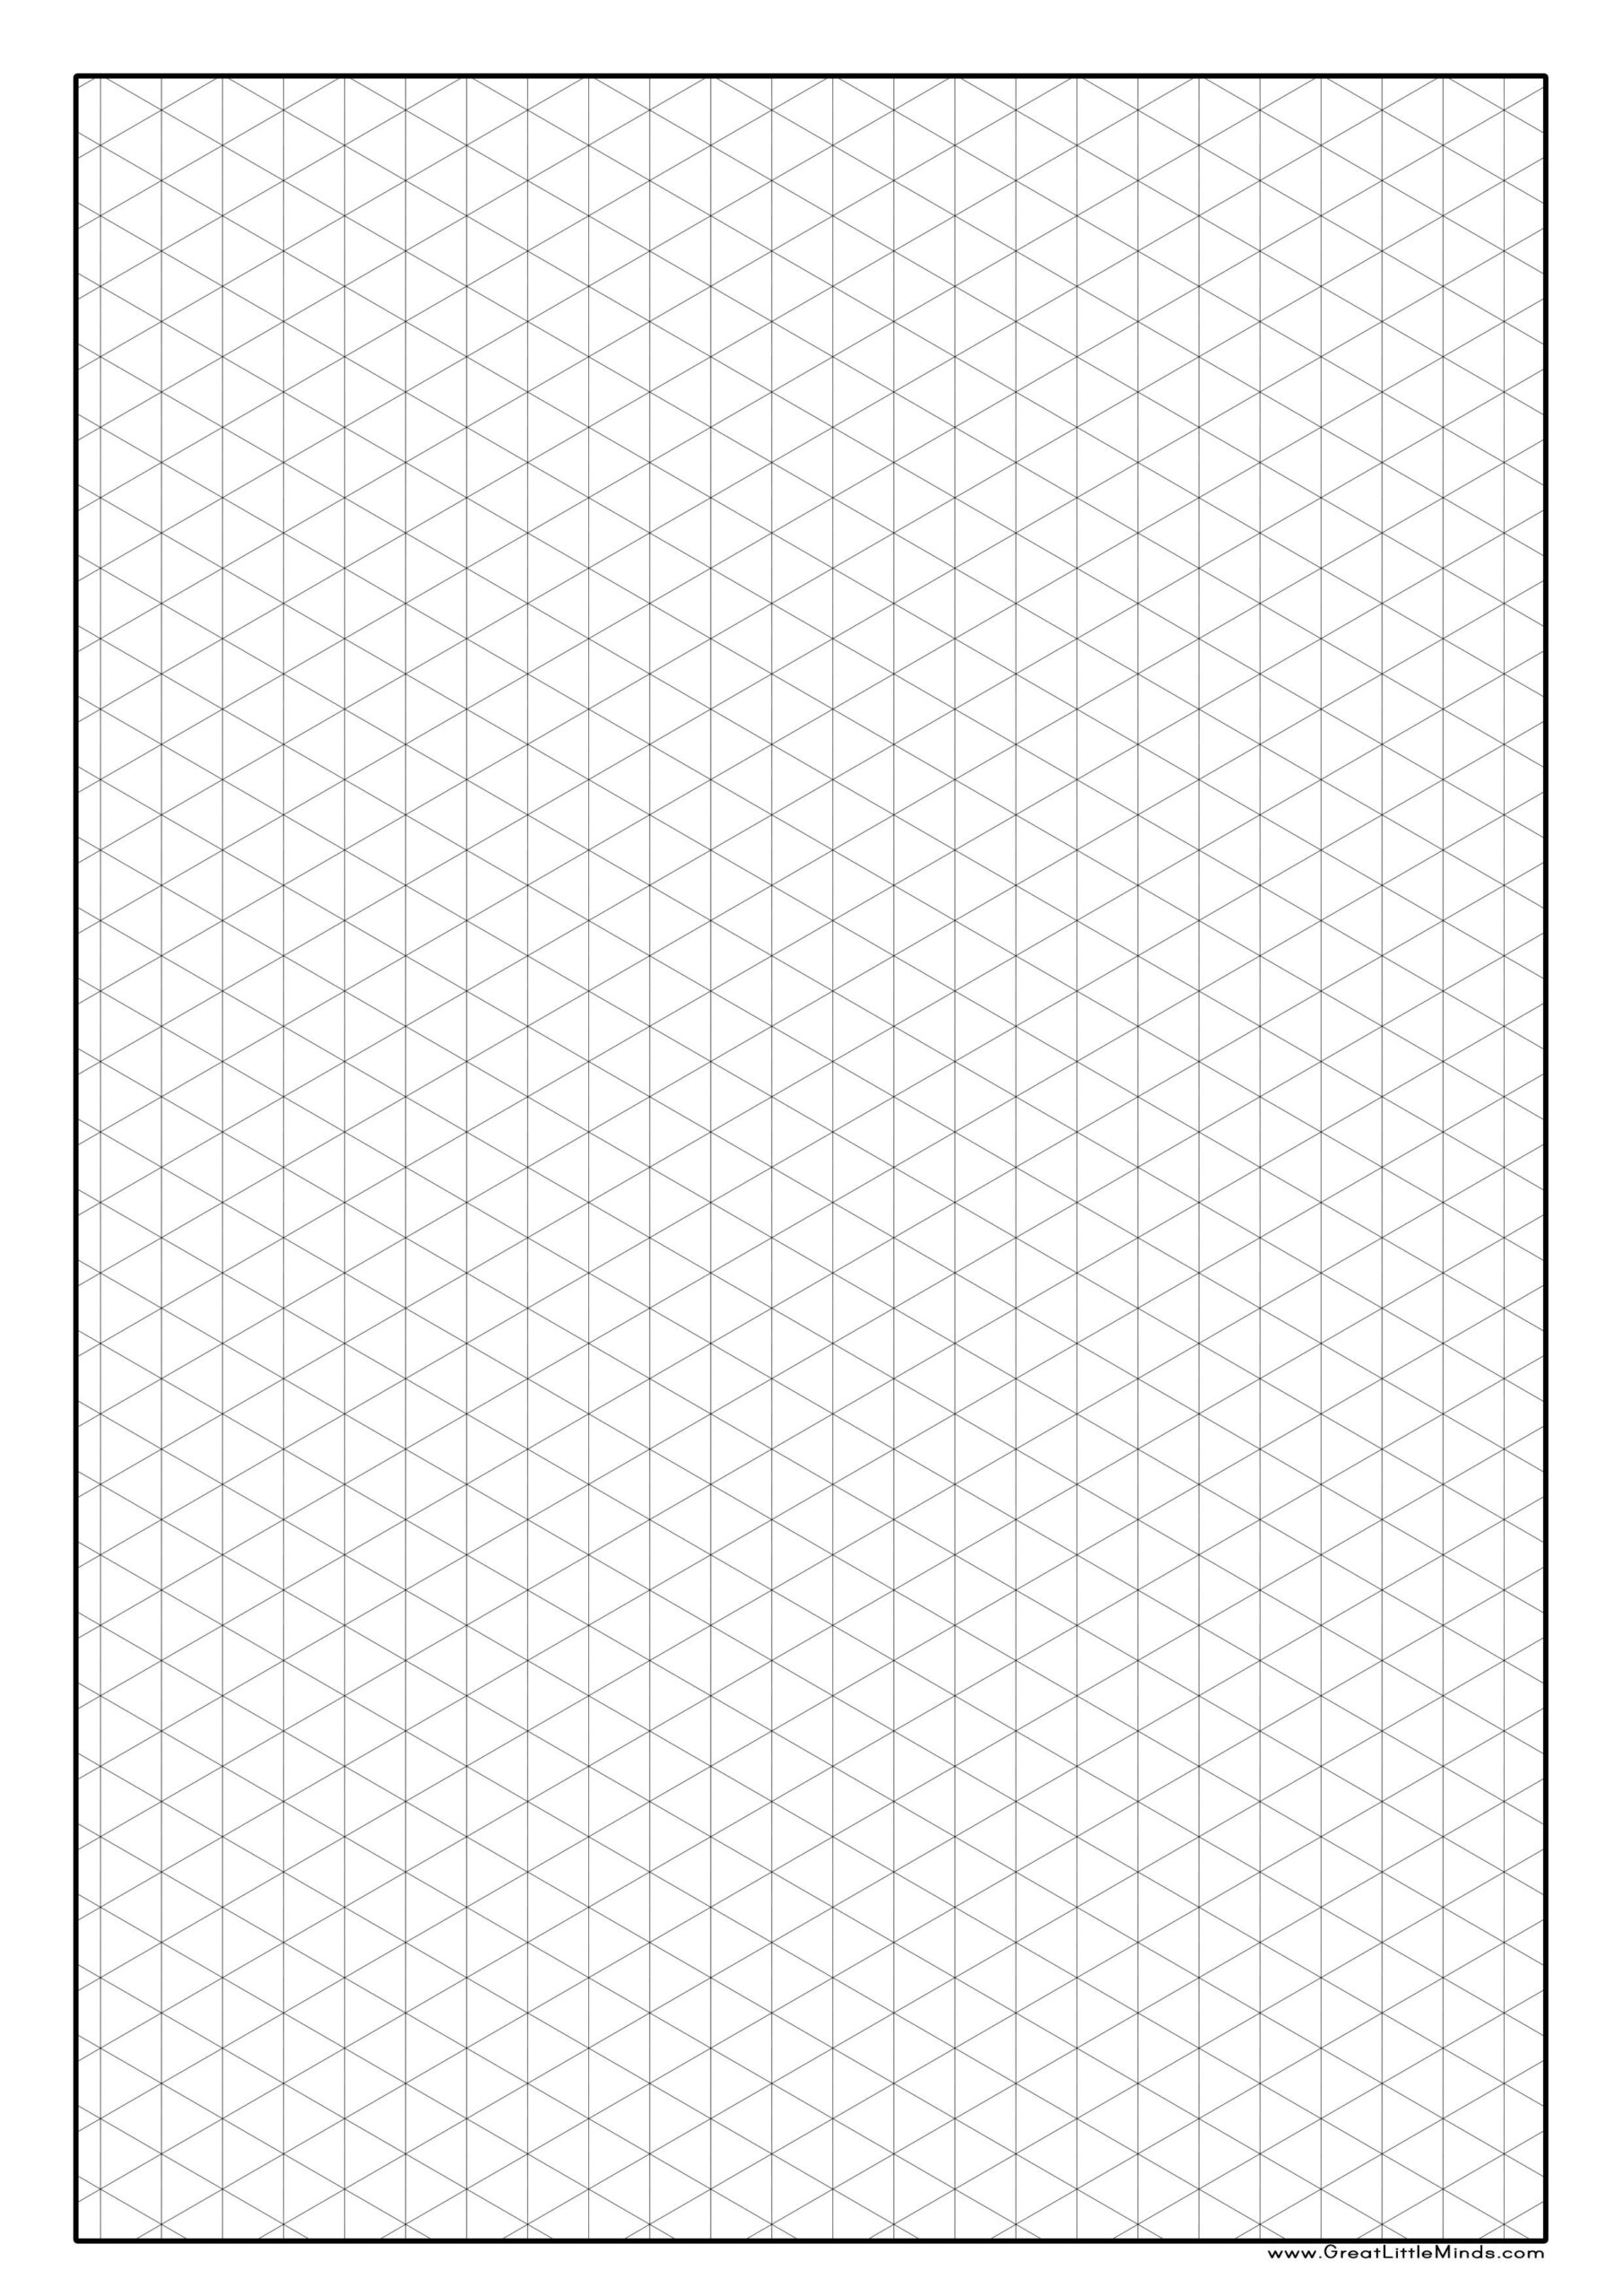 Printable Isometric Graph Paper Dibujos En Cuadricula T cnicas De 